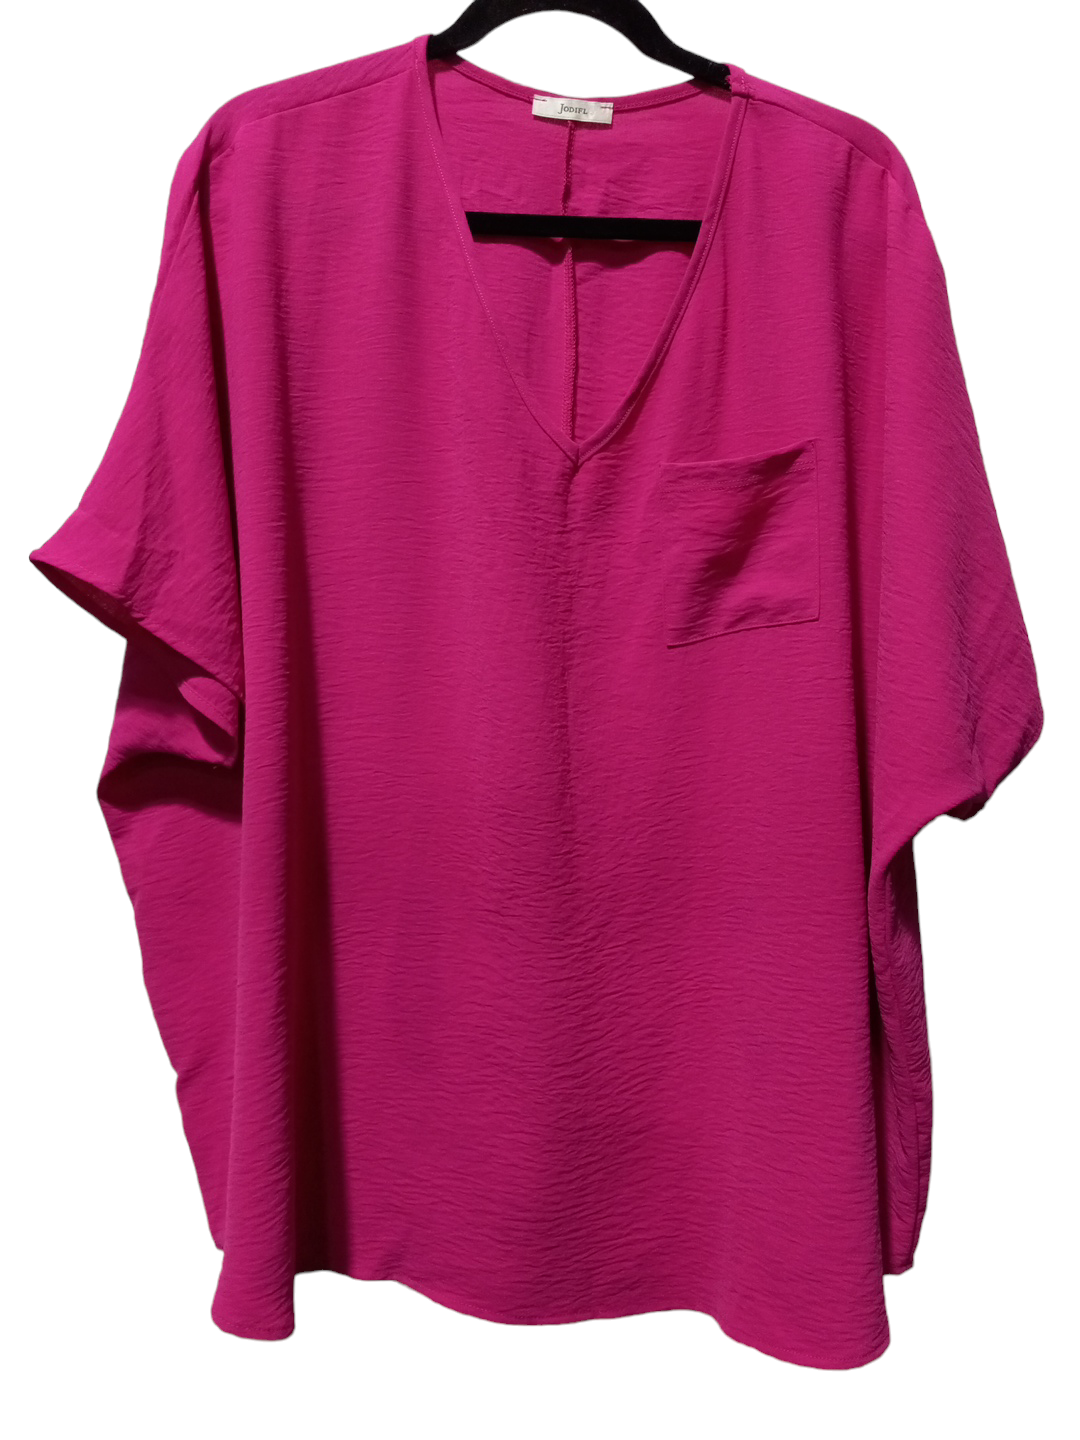 Pink Blouse Short Sleeve Jodifl, Size 1x